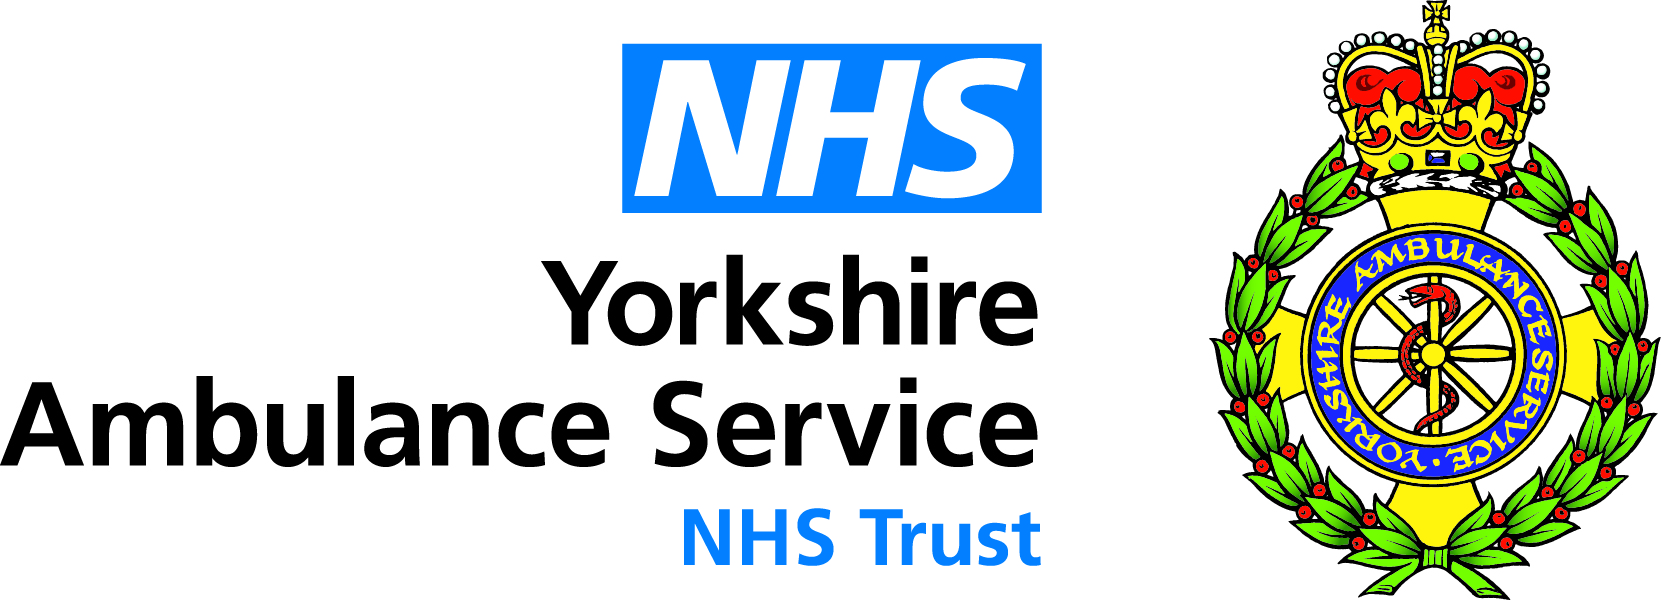 Yorkshire_Ambulance_Service_Logo.jpg